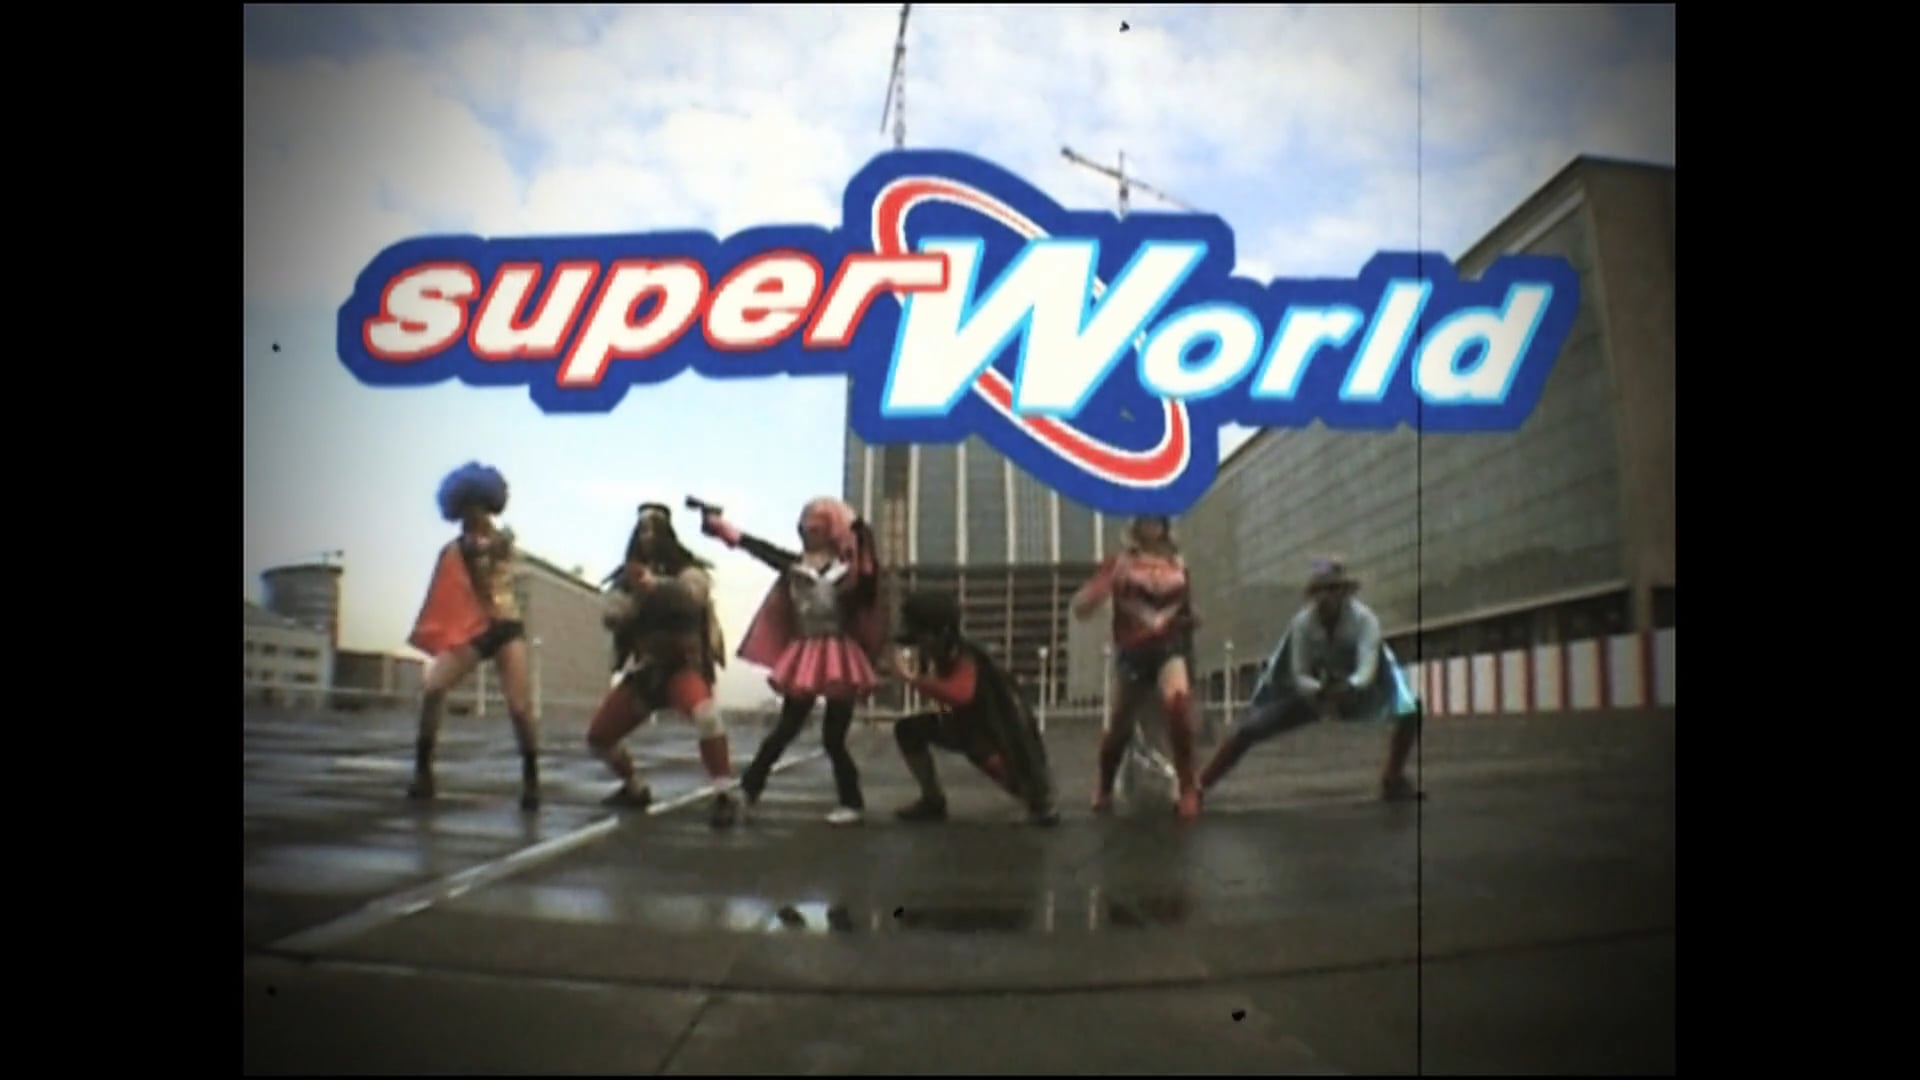 'SuperWorld'